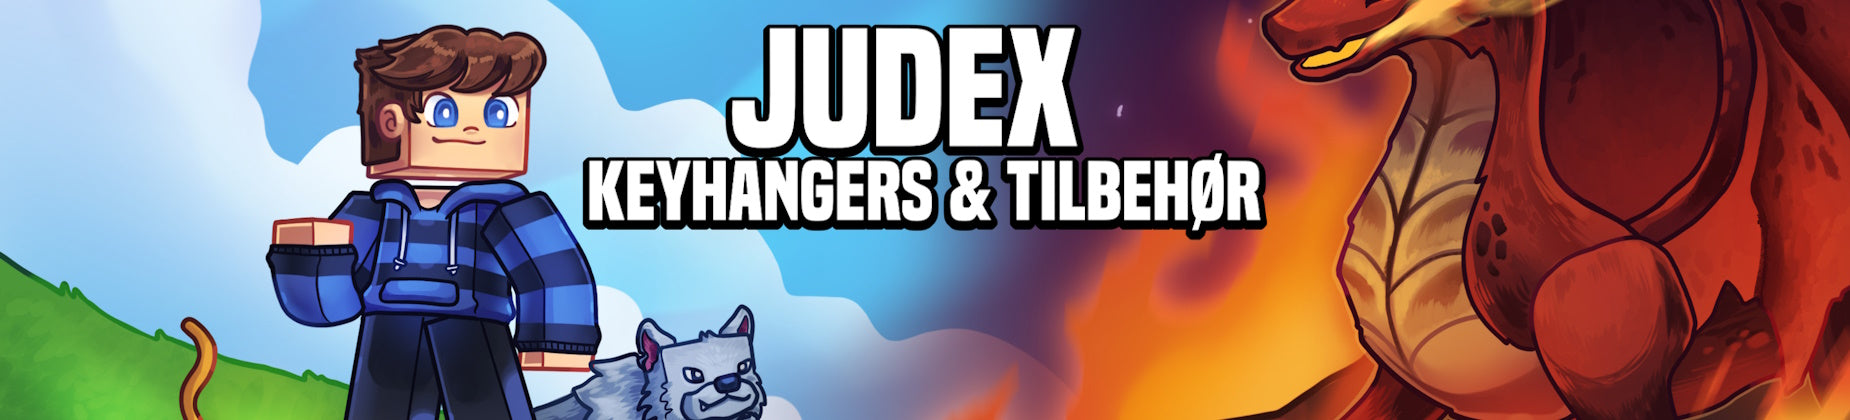 judex keyhangers og tilbehør | Judex merchandise fra geekd